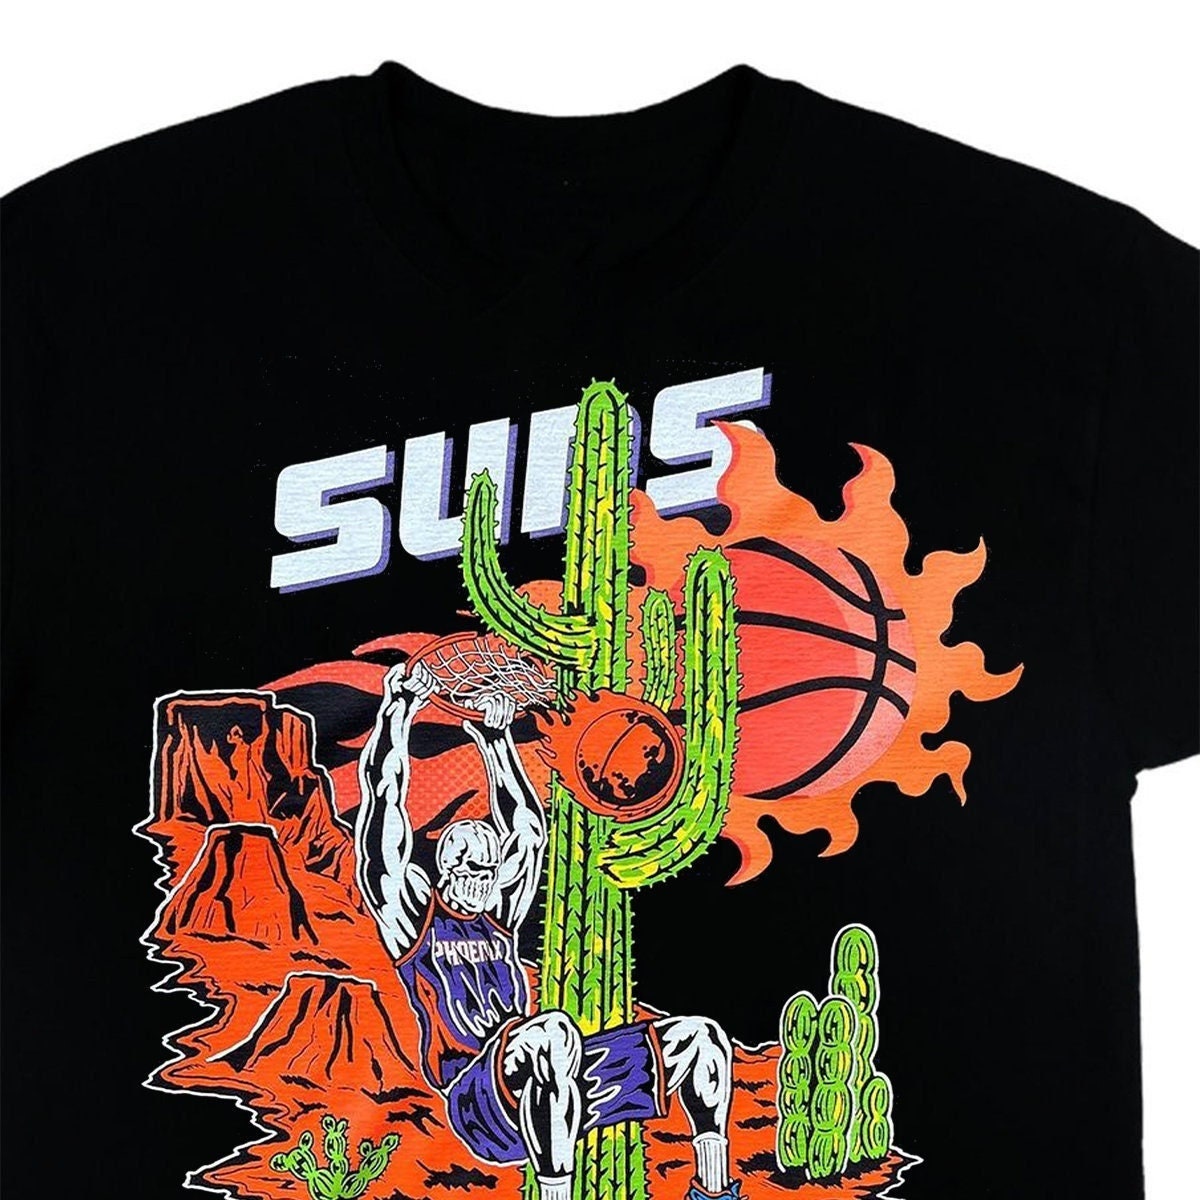 Warren Lotas NBA Team LA Lakers Lebron Shirt